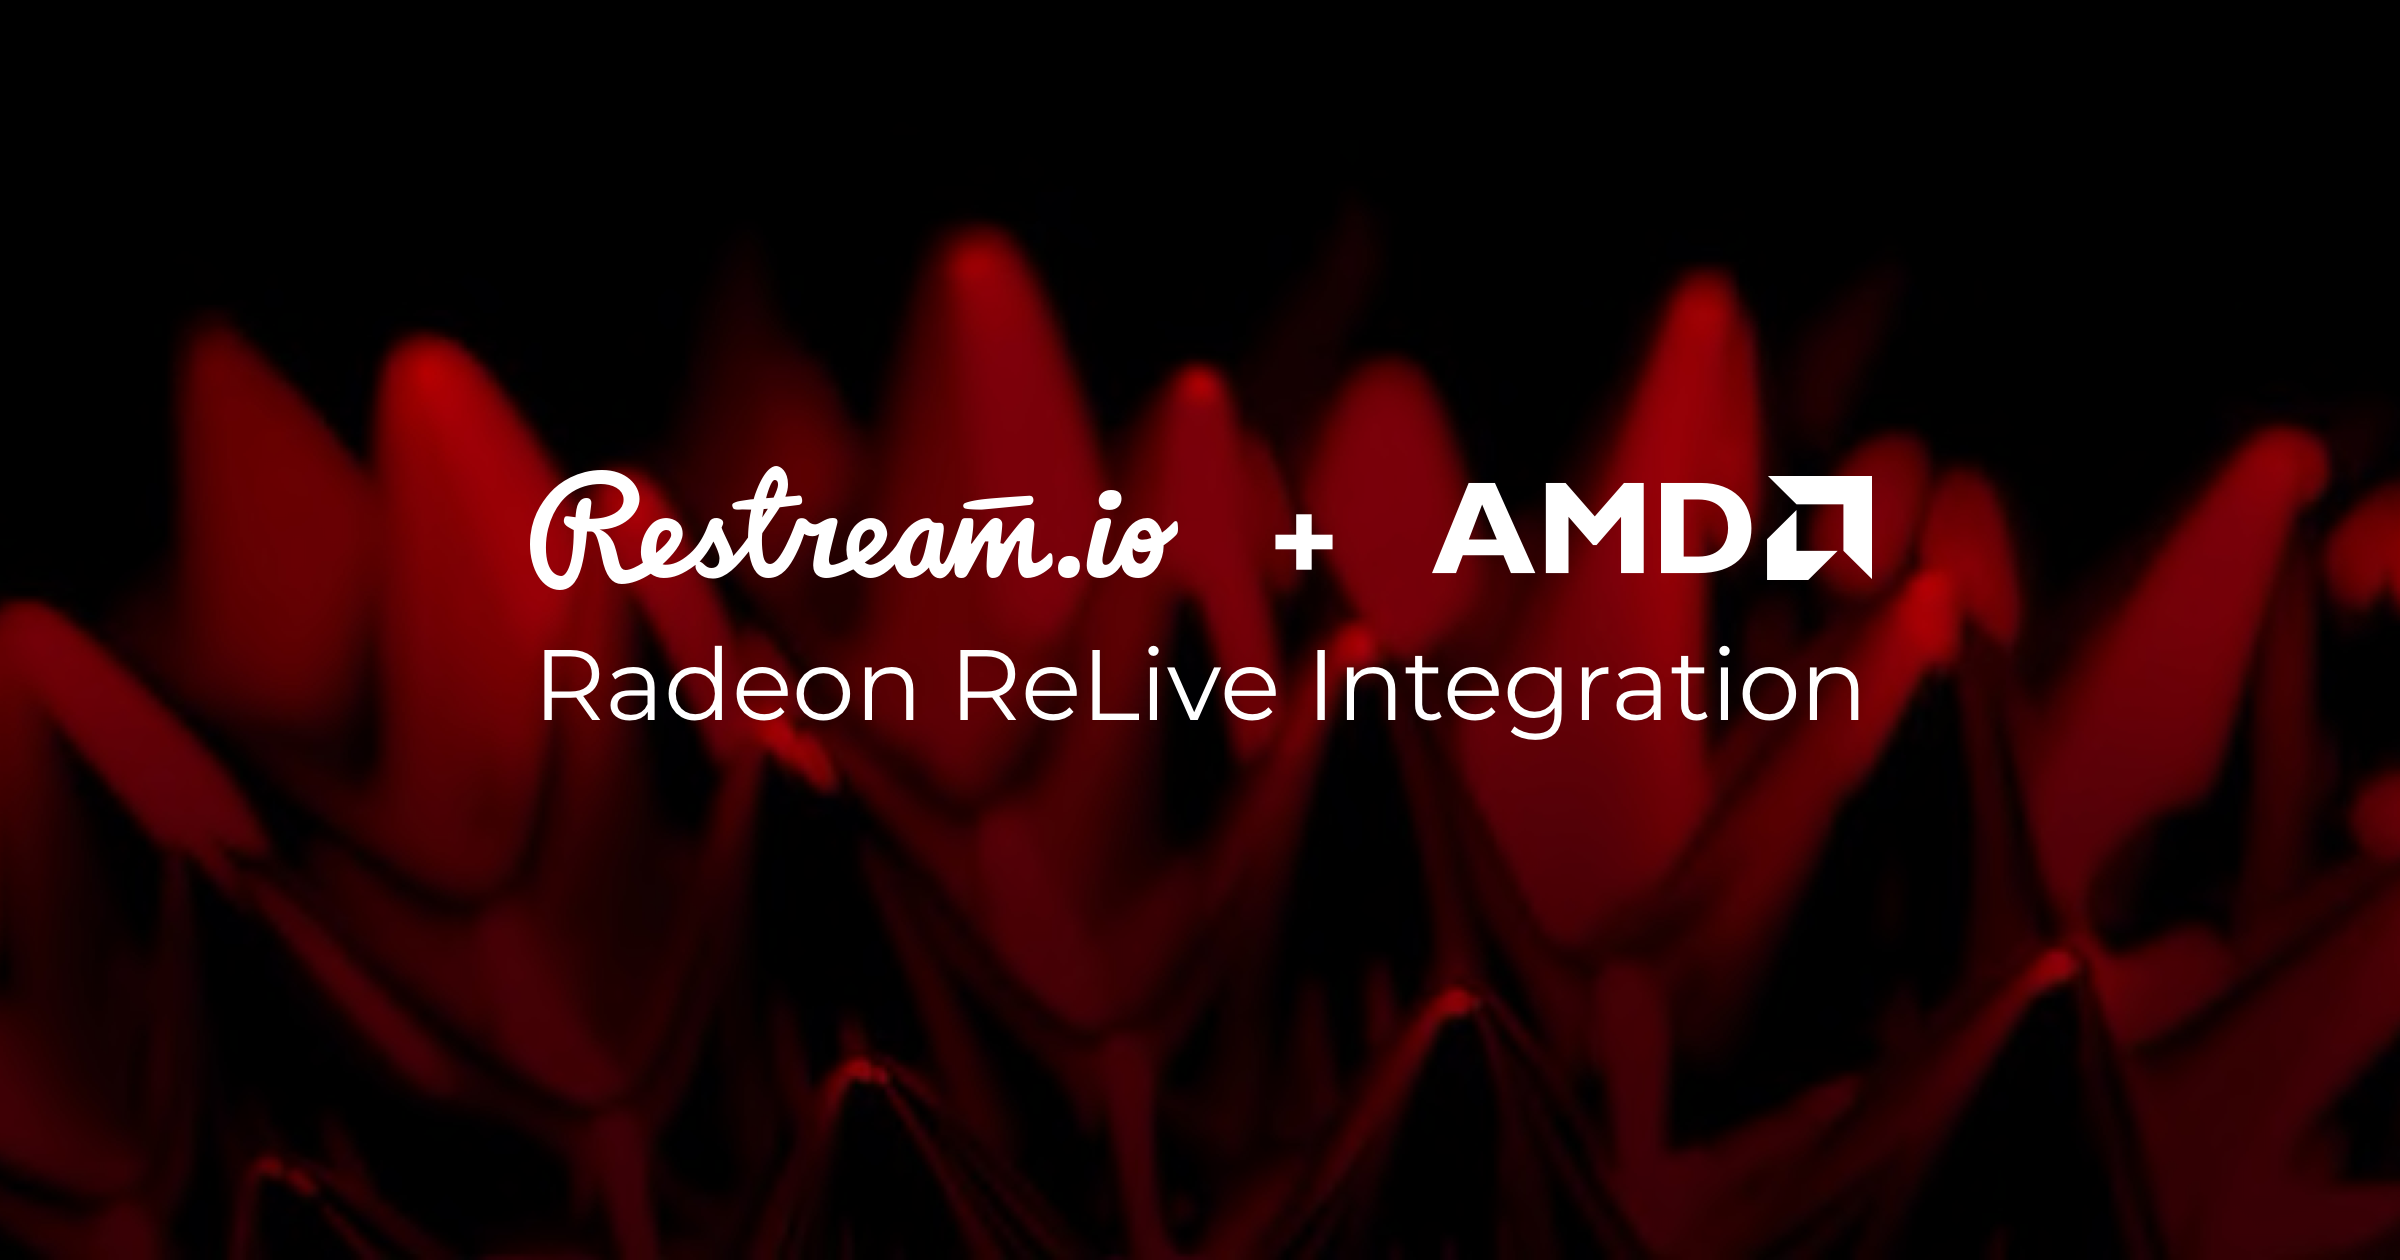 Restream and AMD partner to bring multi-platform support to Radeon